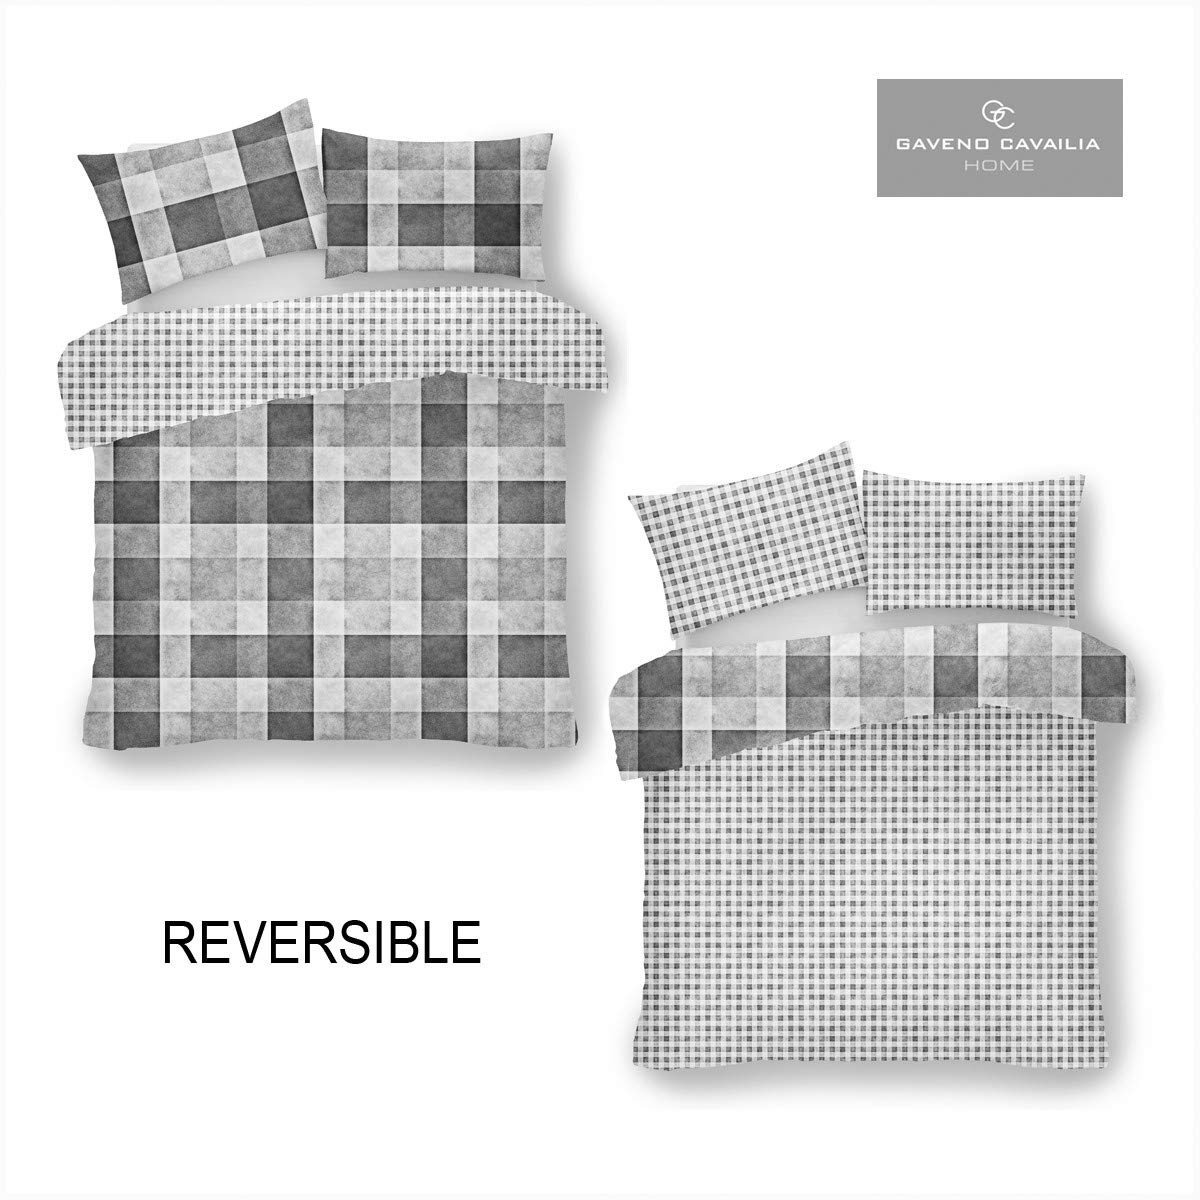 GC GAVENO CAVAILIA Geometric Duvet Cover Single (135cm X 200cm) with Pillowcase   Bedding Set Single   Polycotton Comforter Cover   Grey